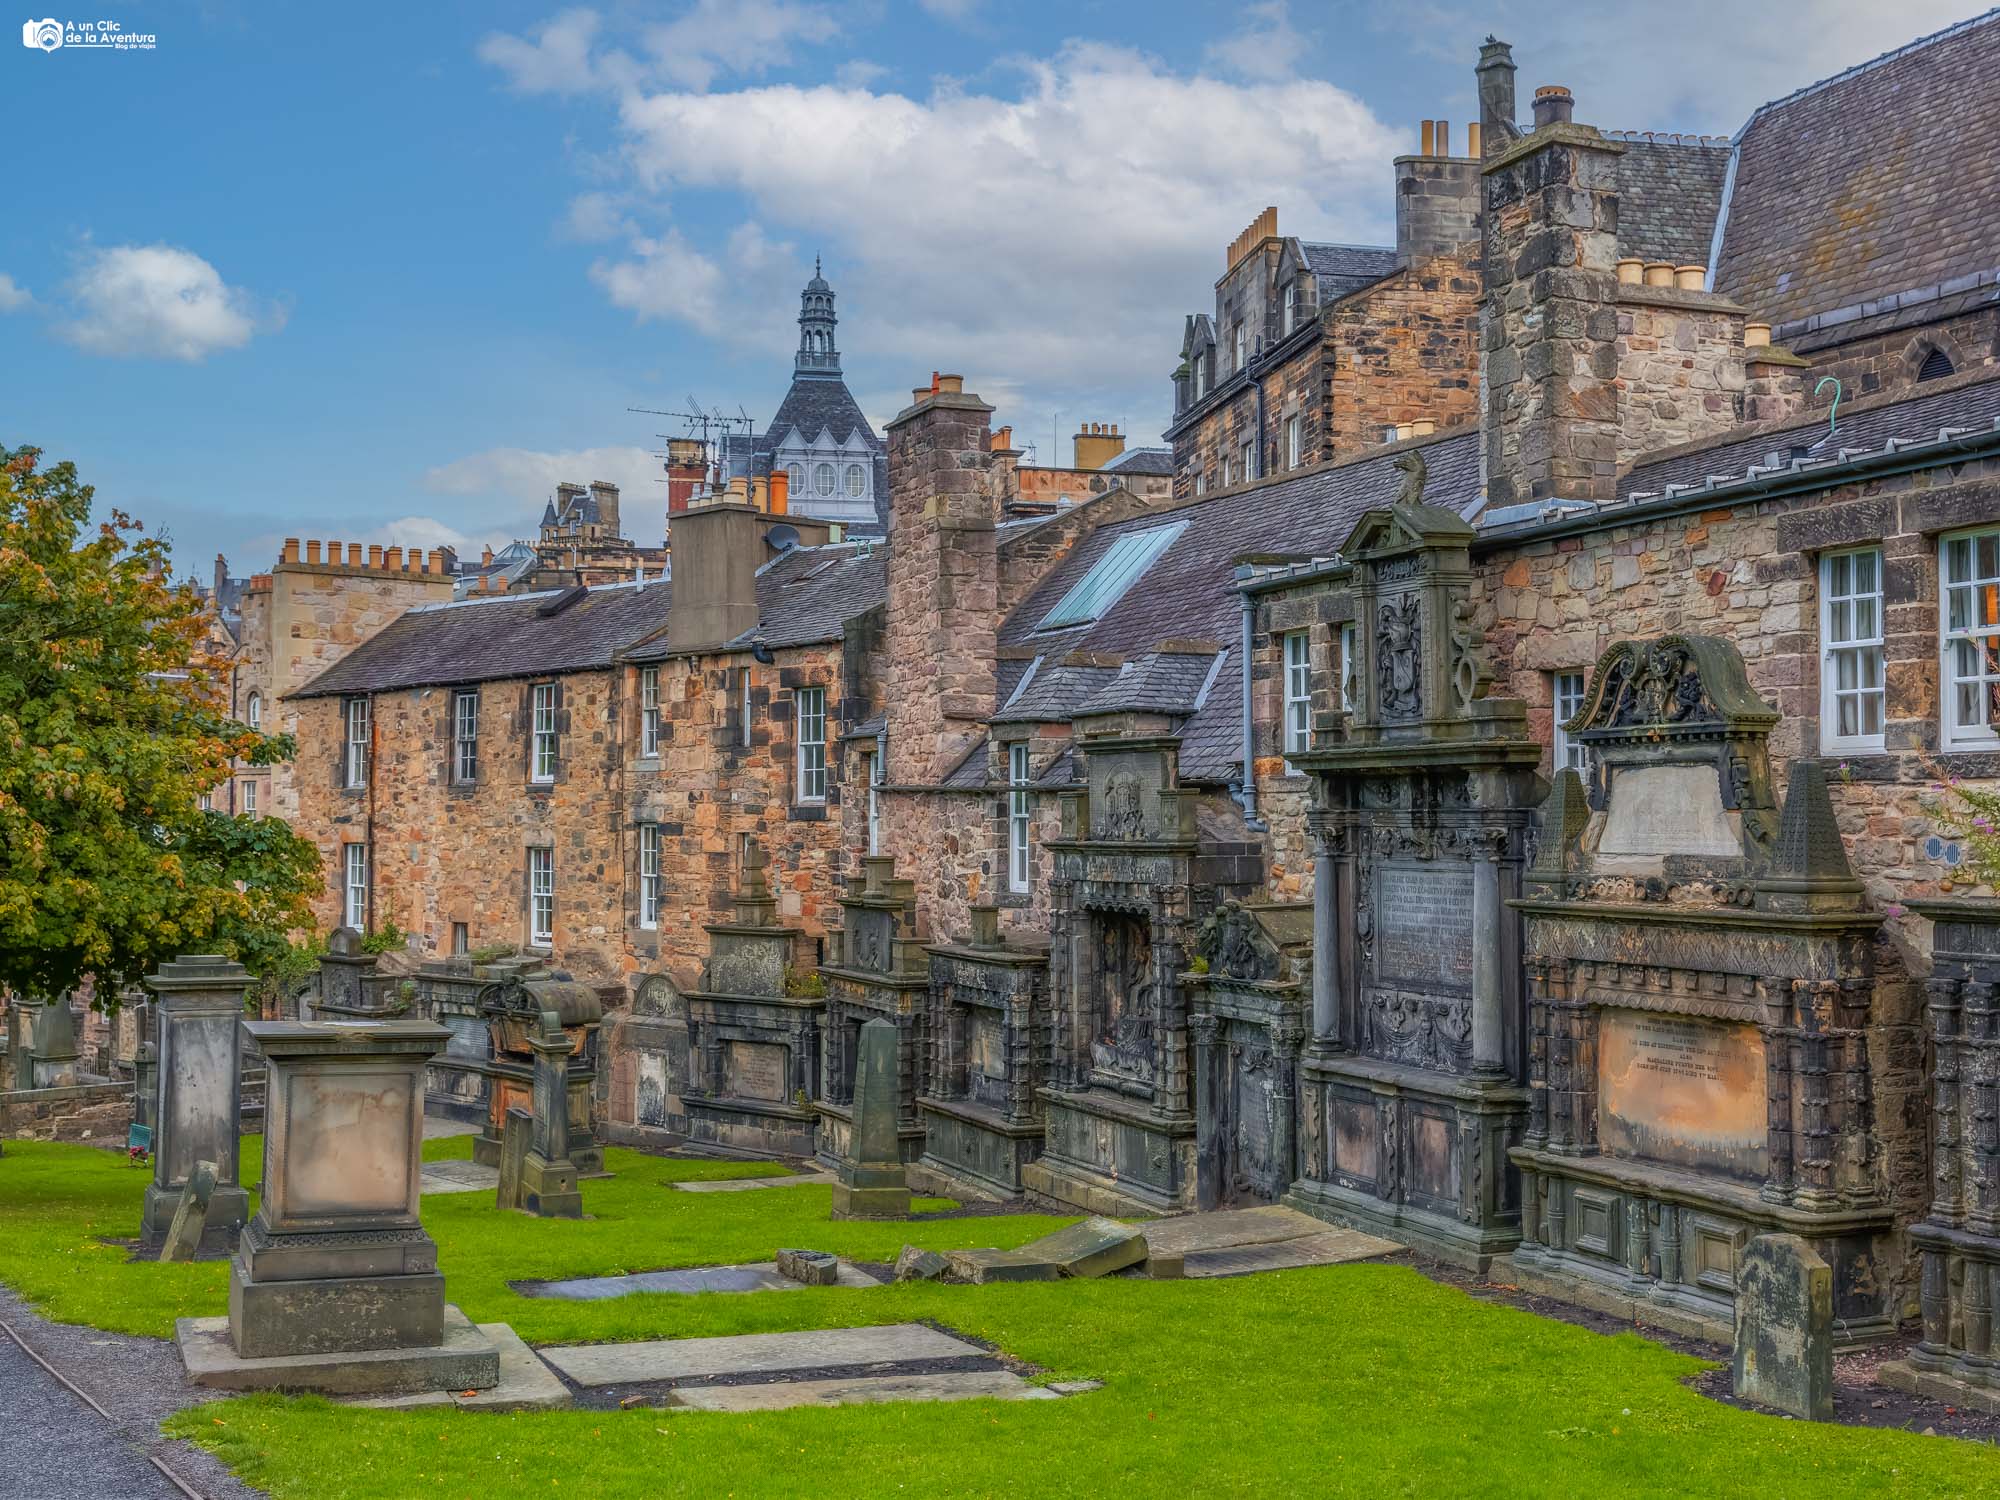 Cementerio de Greyfriars, que ver en Edimburgo